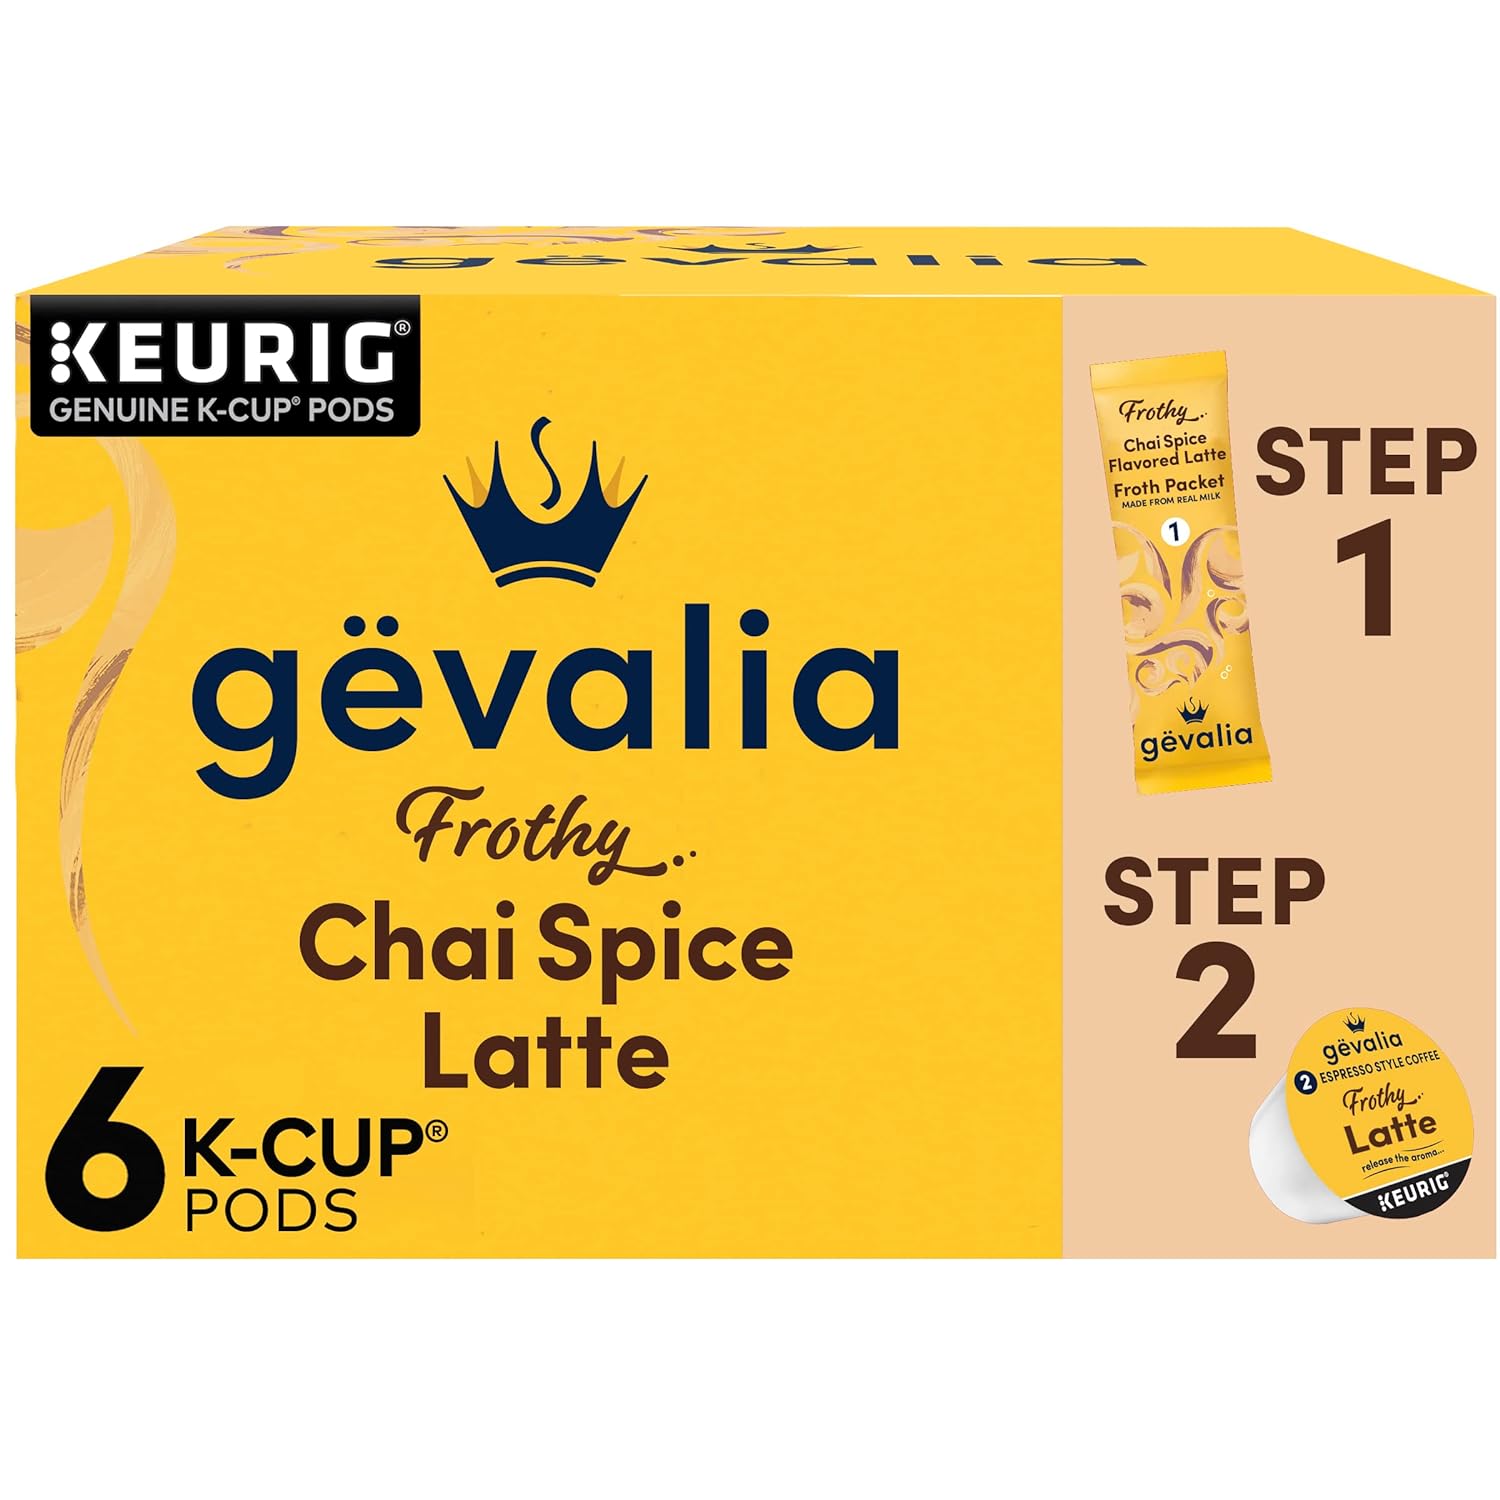 Gevalia -Chai Spice Flavored Latte Coffee (6 Pack, 5.64 oz each)